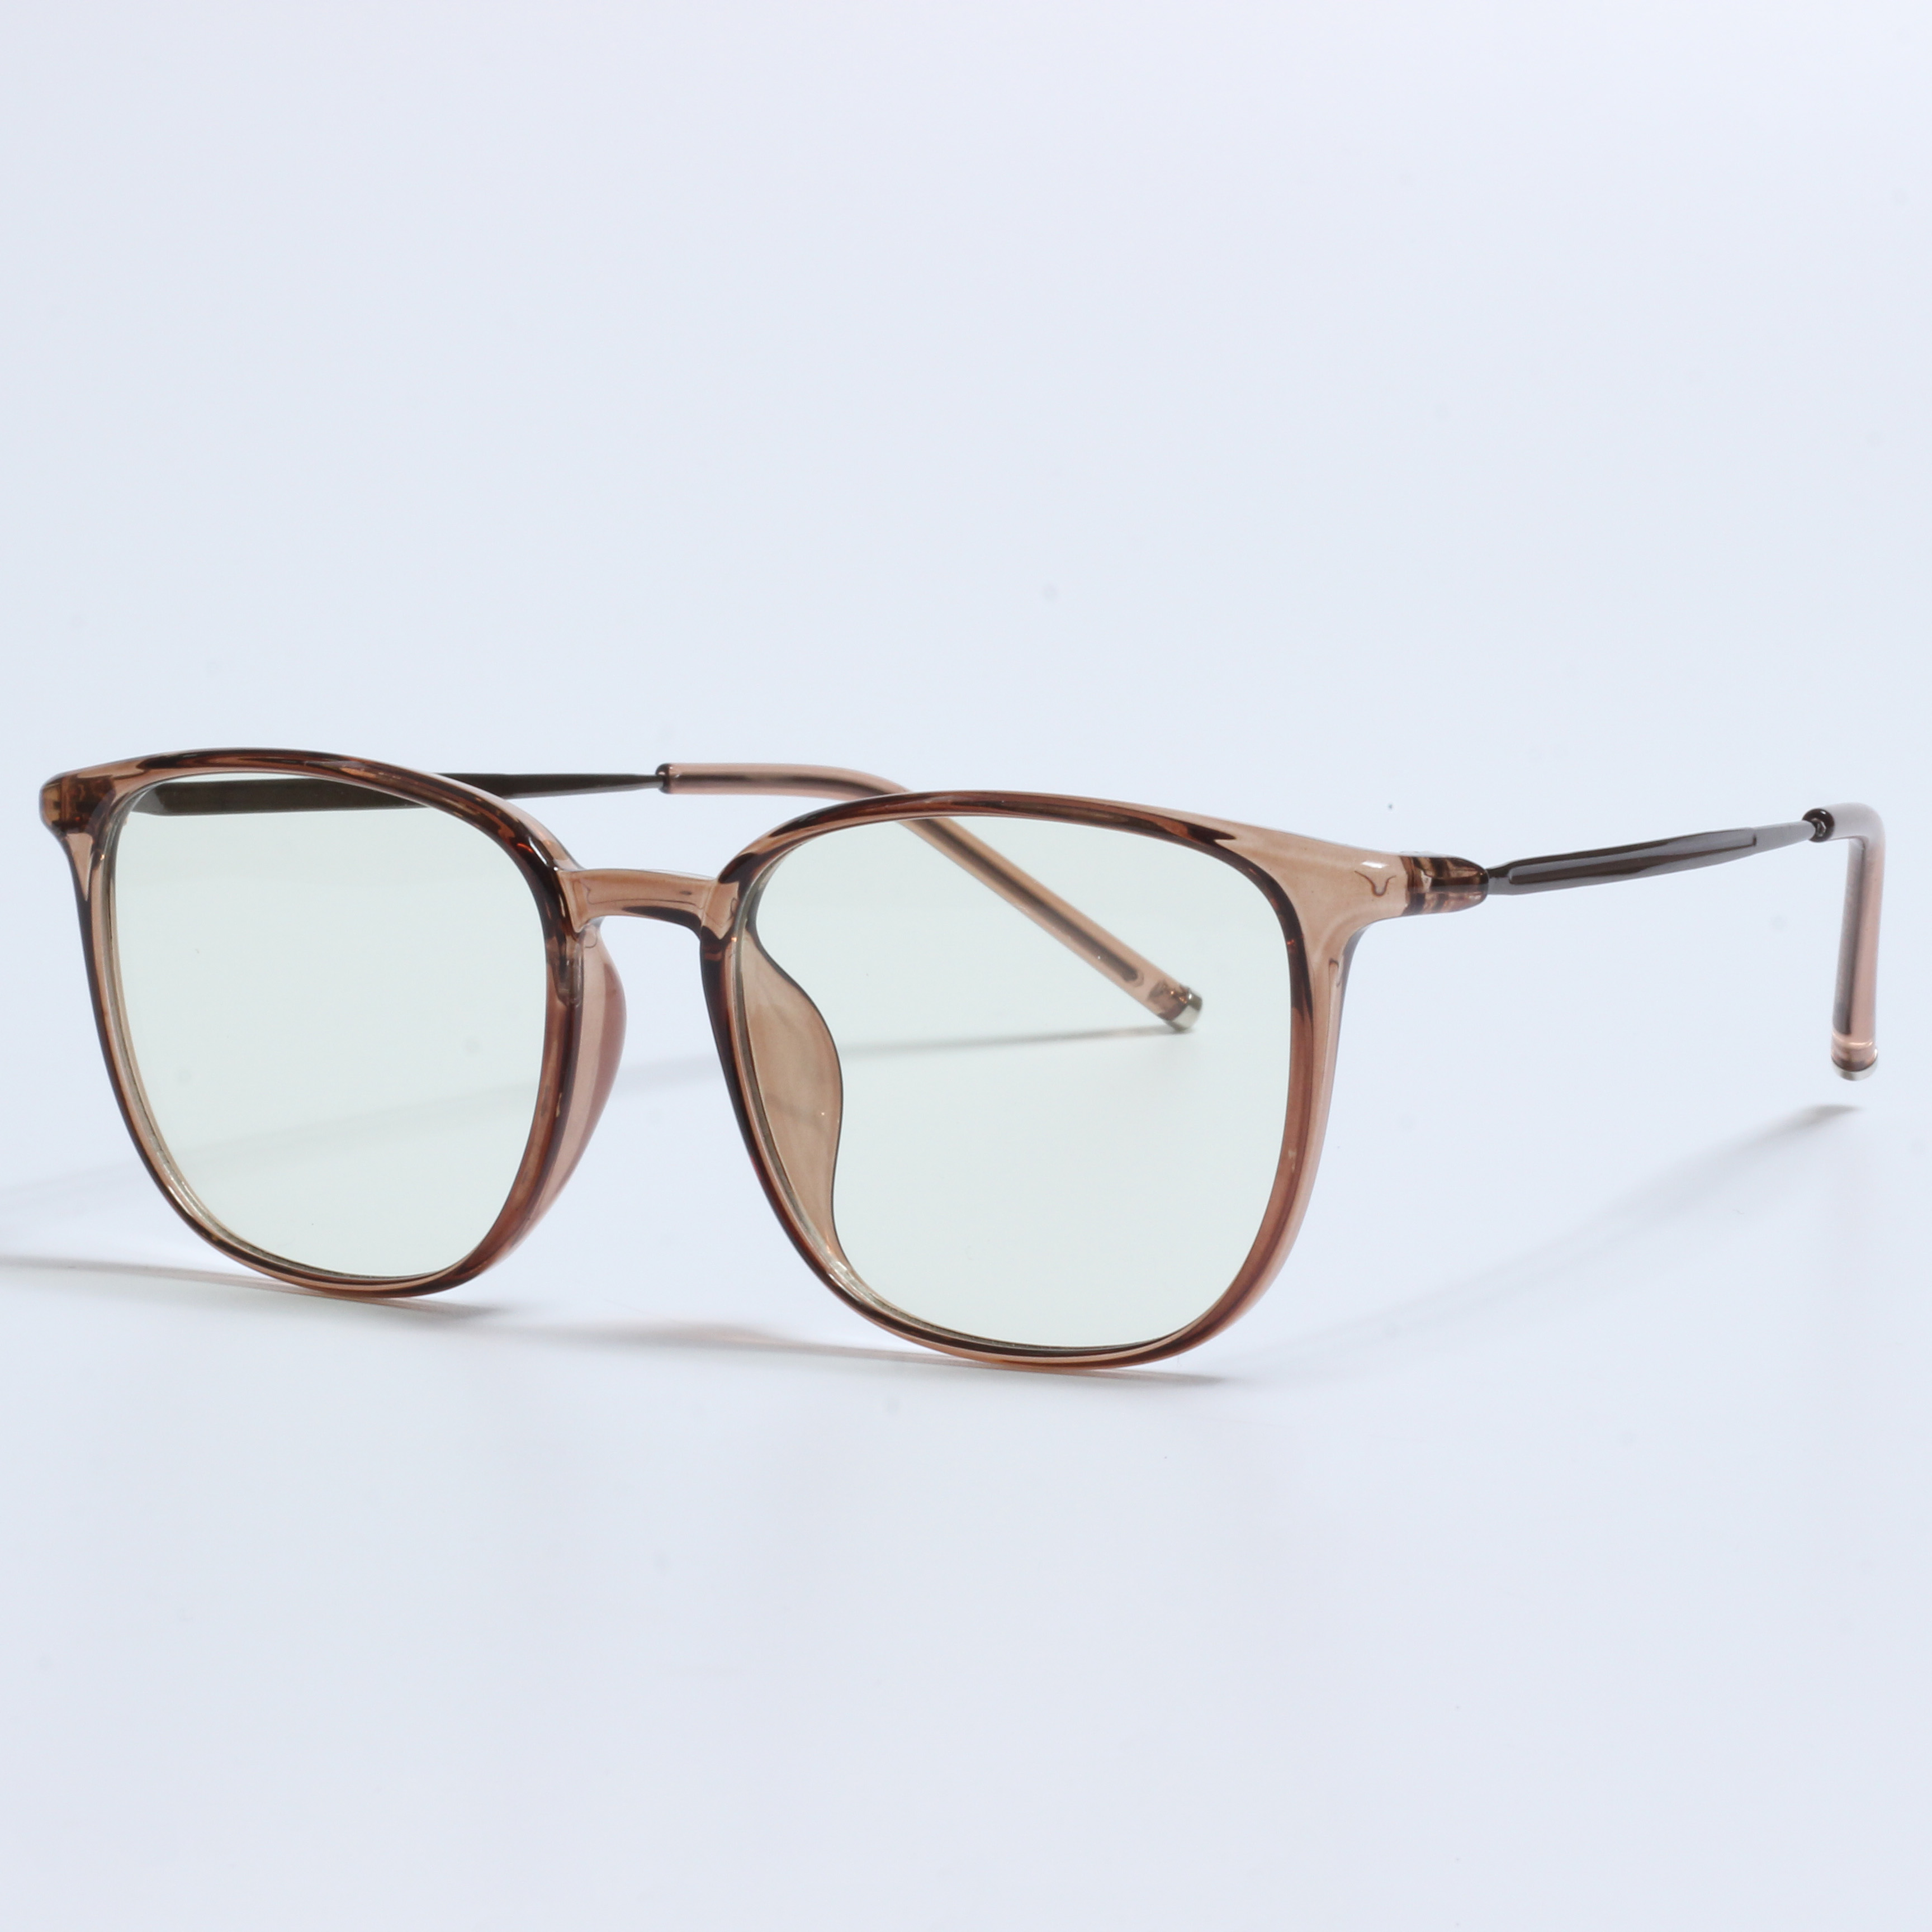 Bag-ong retro lunette anti lumiere designer nga reseta nga baso (7)